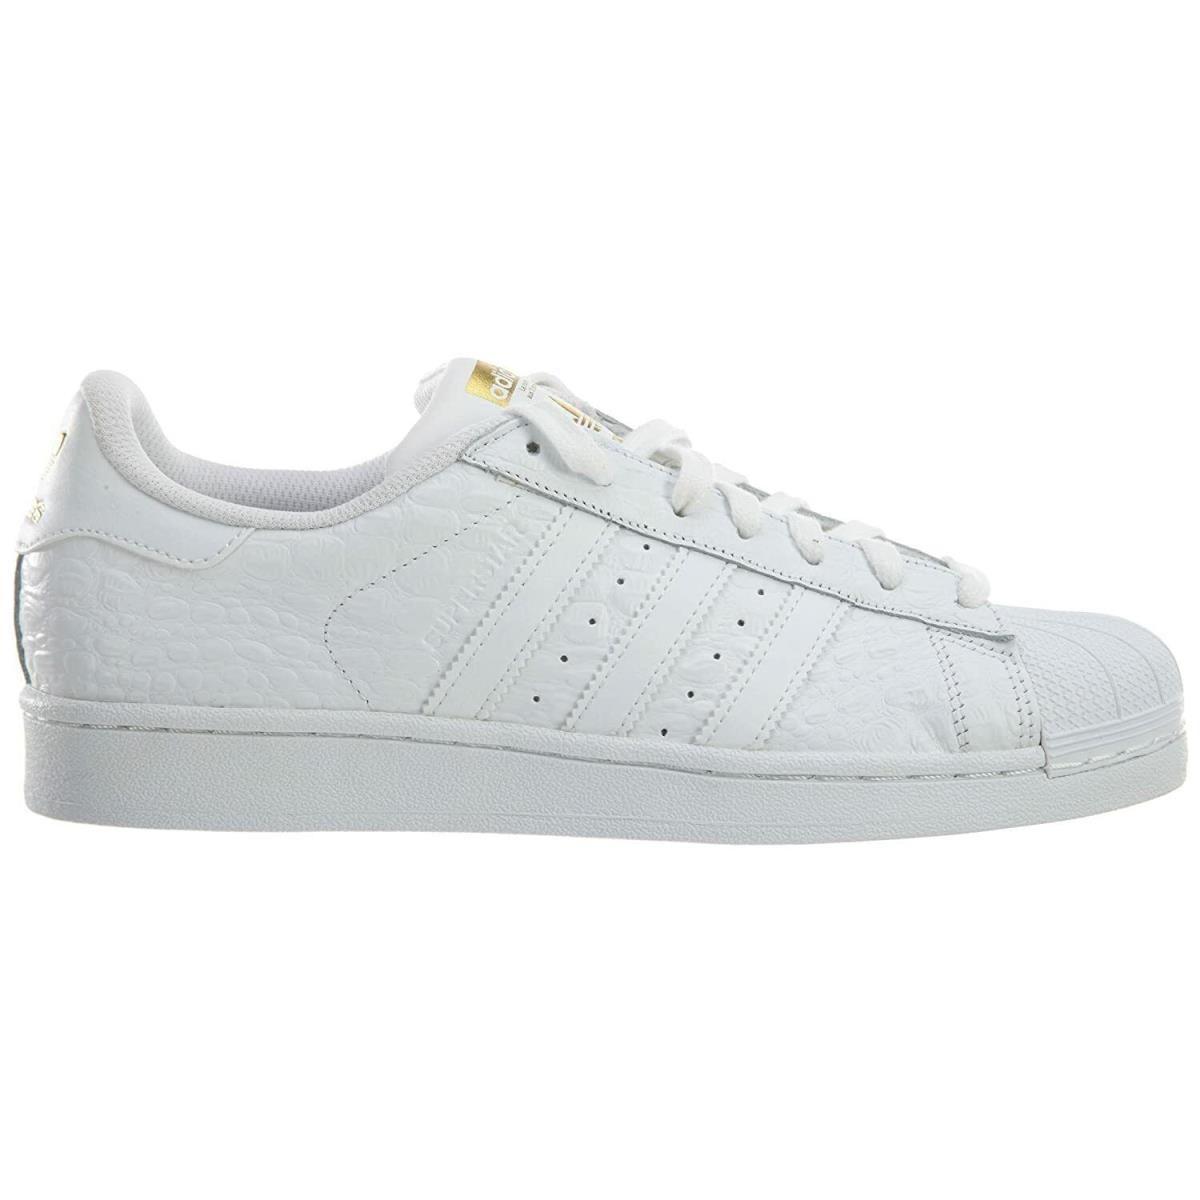 Adidas Originals Superstar Croc AQ6686 Men`s White Leather Sneaker Shoes GA19 - White